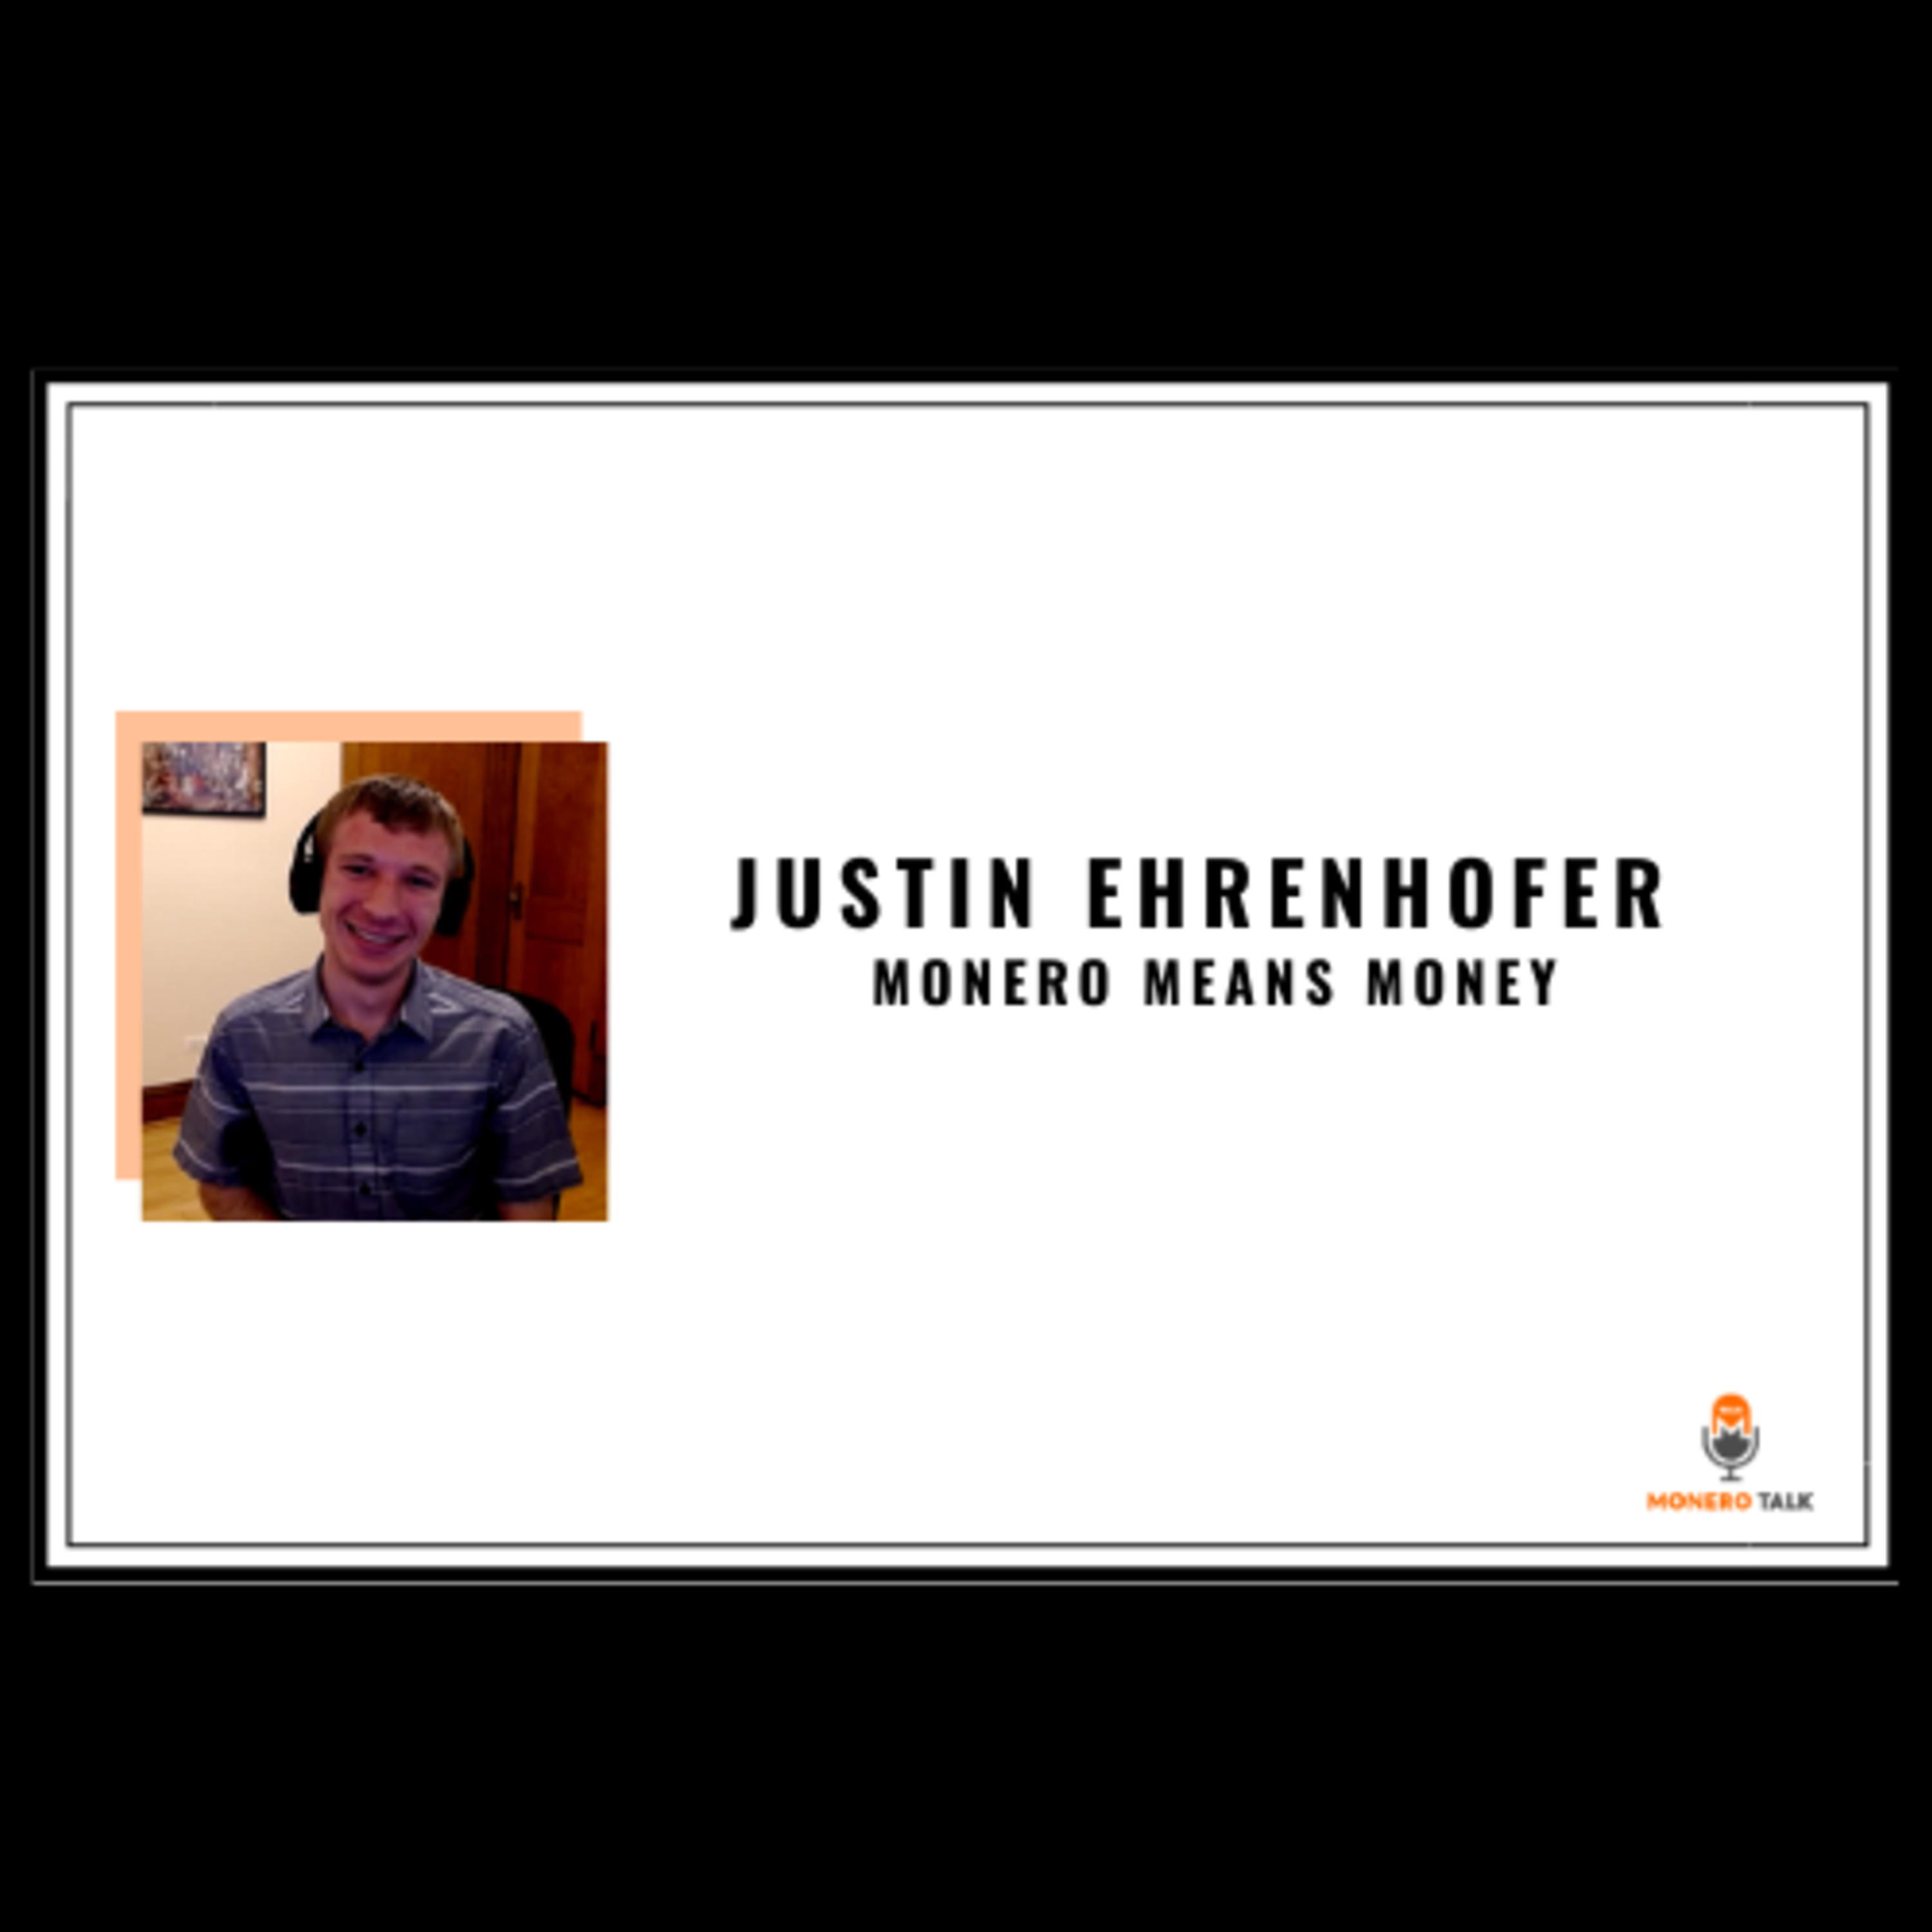 Justin Ehrenhofer: On Monero Means Money